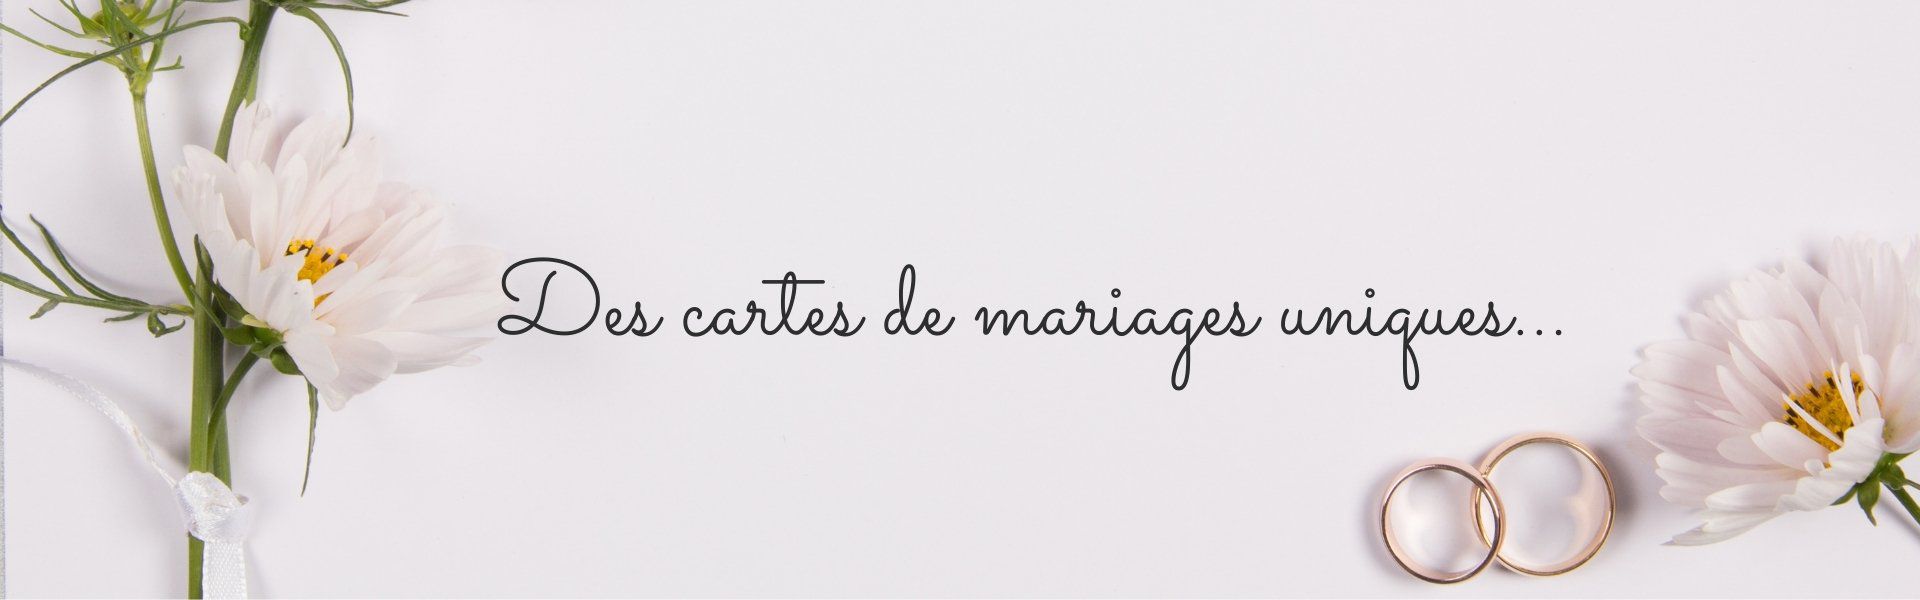 cartes_de_mariage.jpg